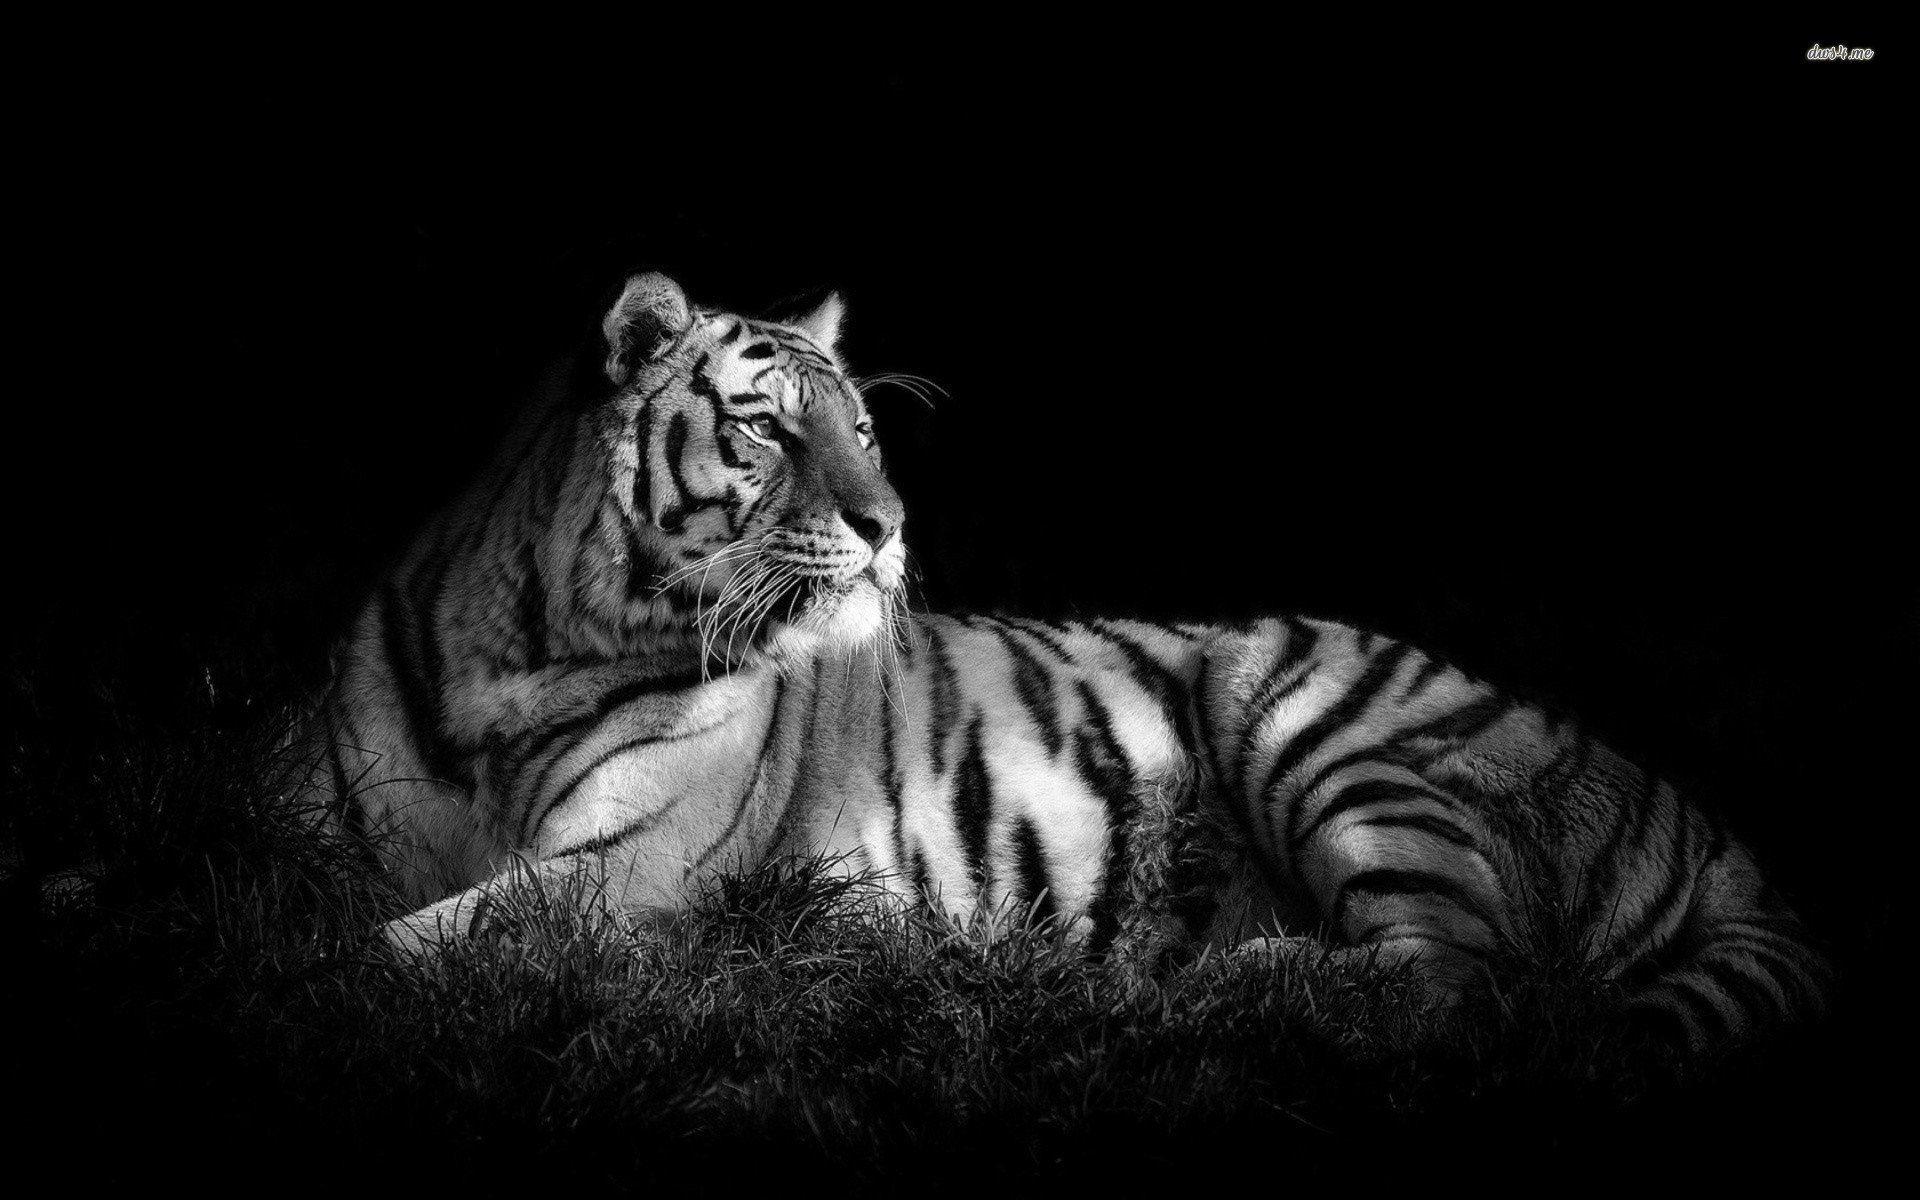 Tiger In Black & White. PC Wallpaper Black And White Tiger